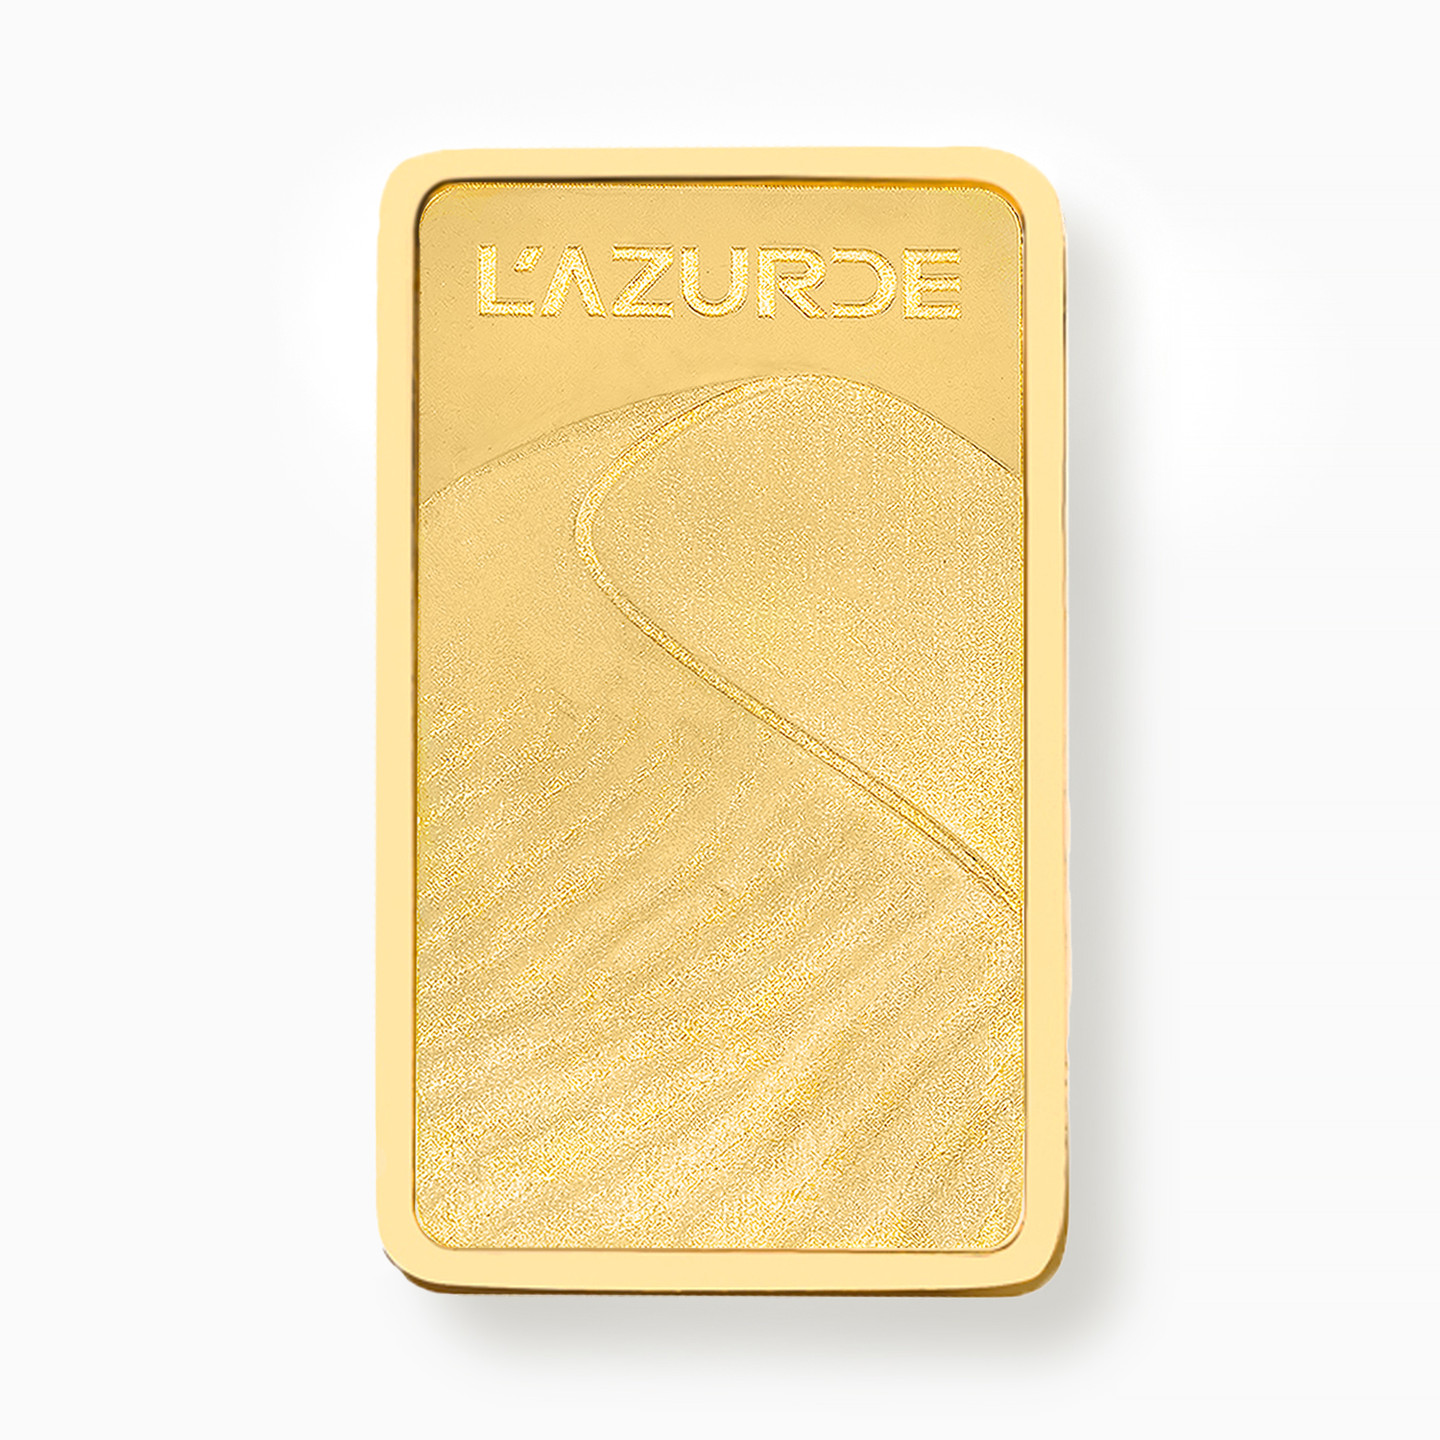 24K Gold Bar 1g - 2